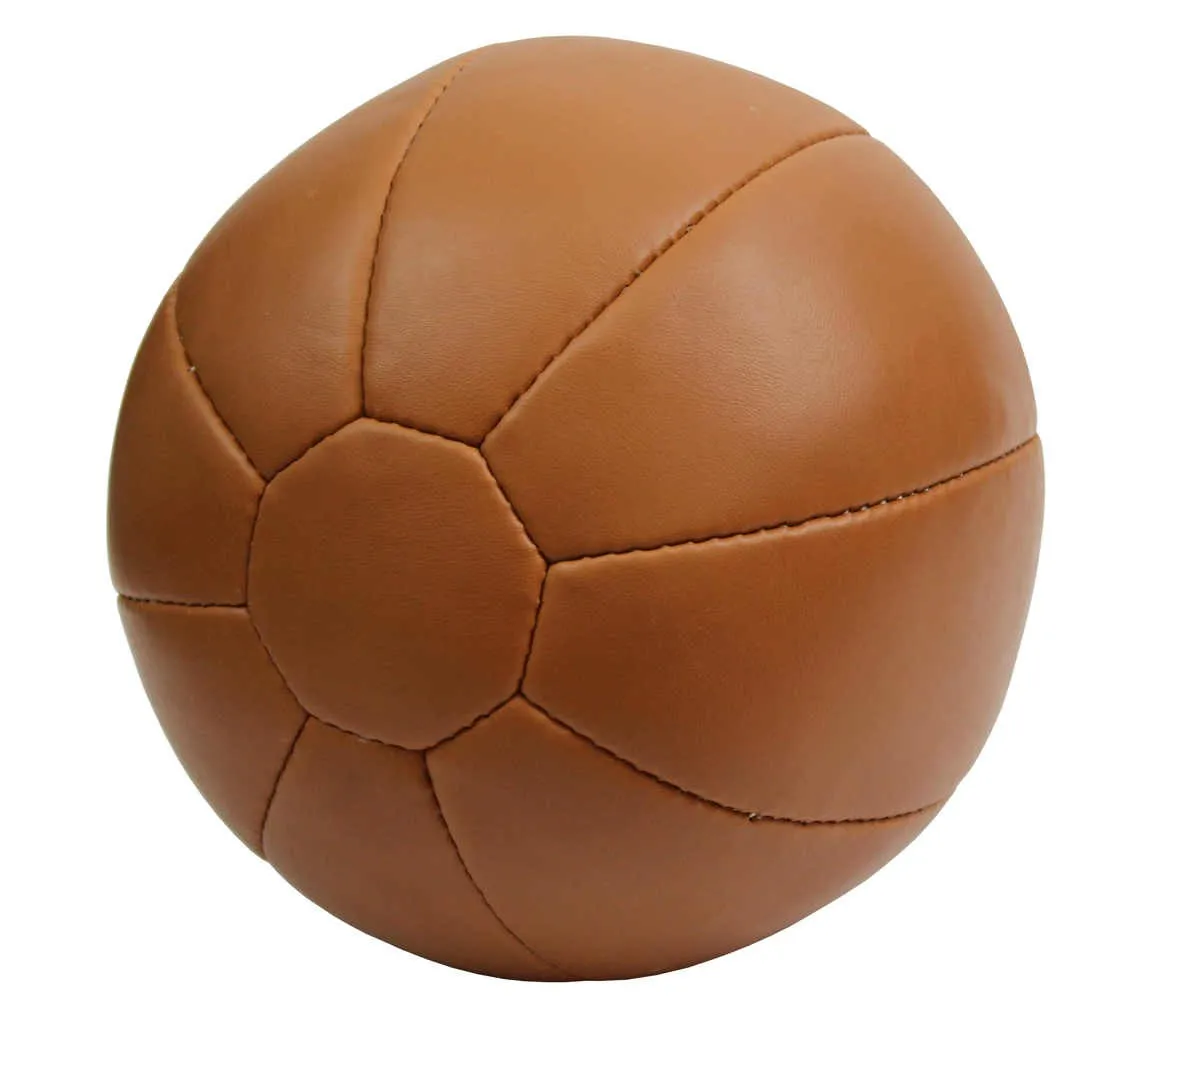 Medizinball 5 kg, 26 cm en cuir synthetique Slamball